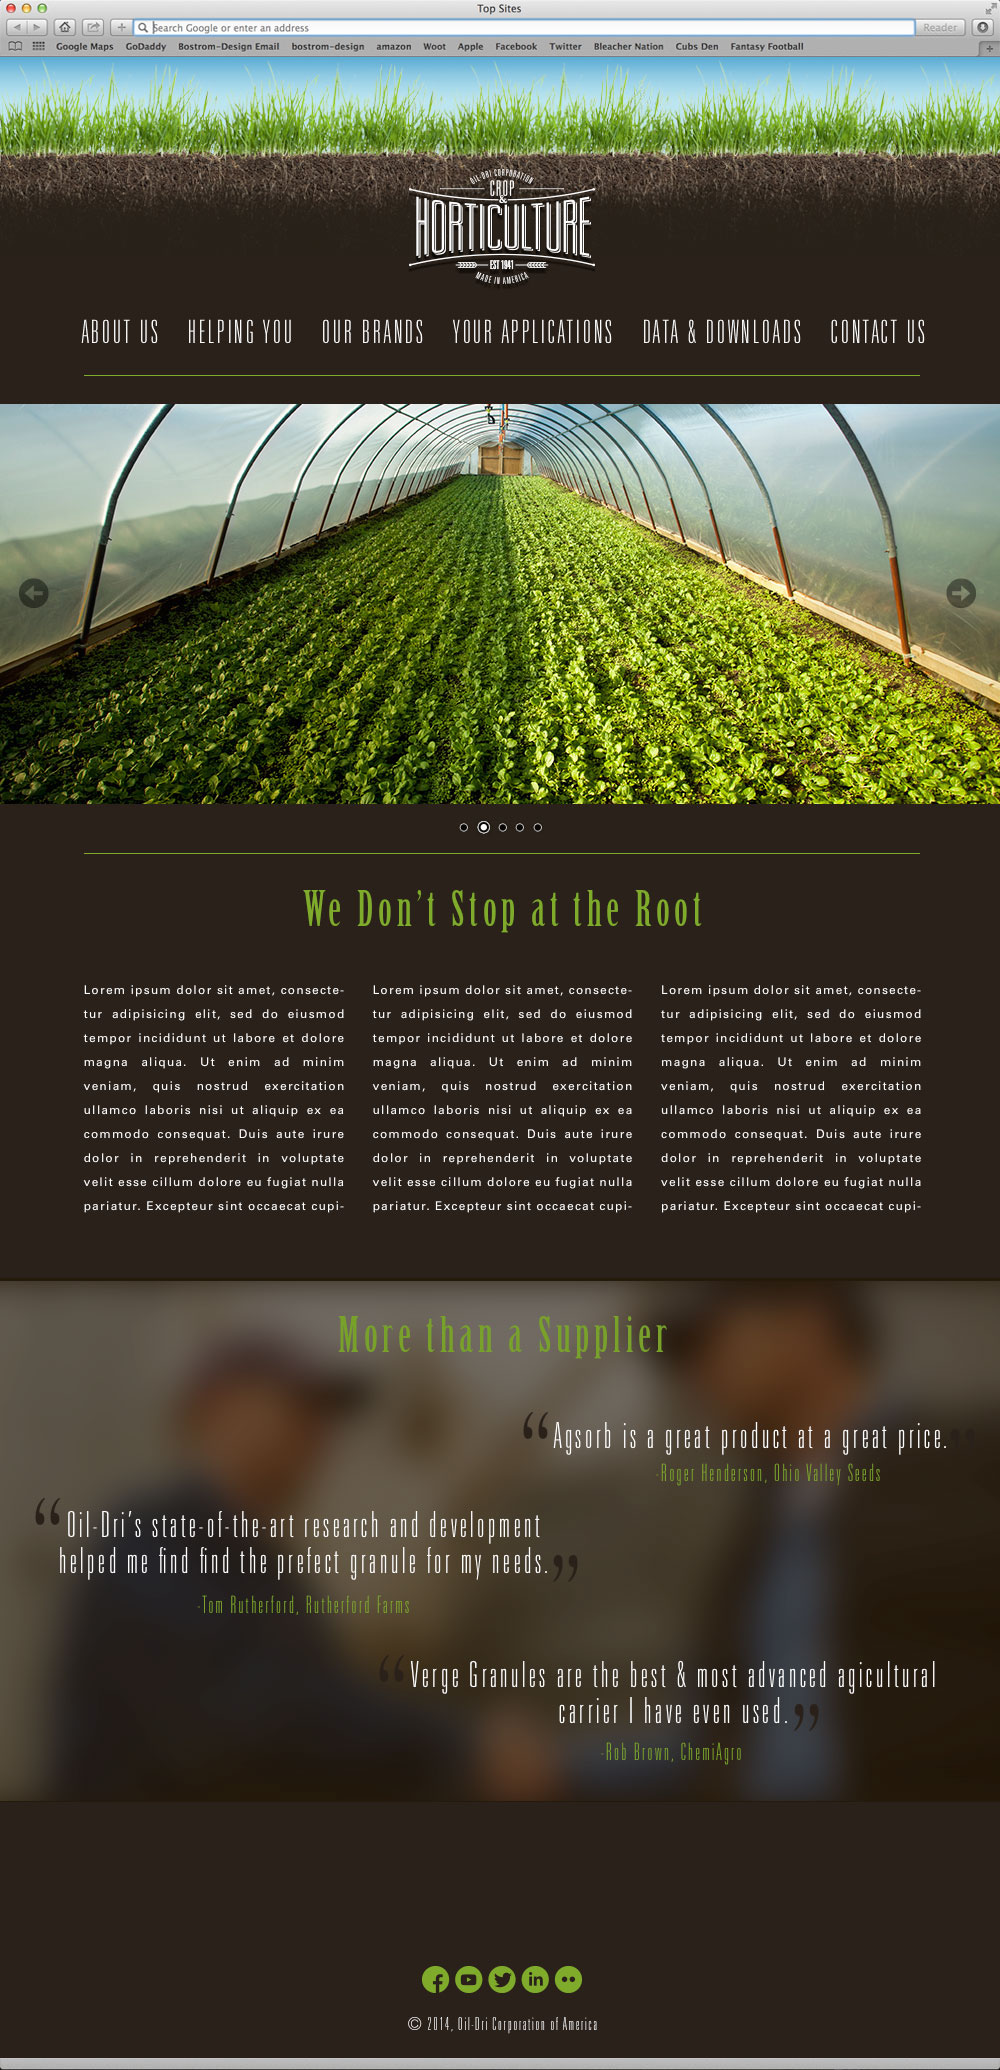 logo Identity work green horticulture growing crops Website